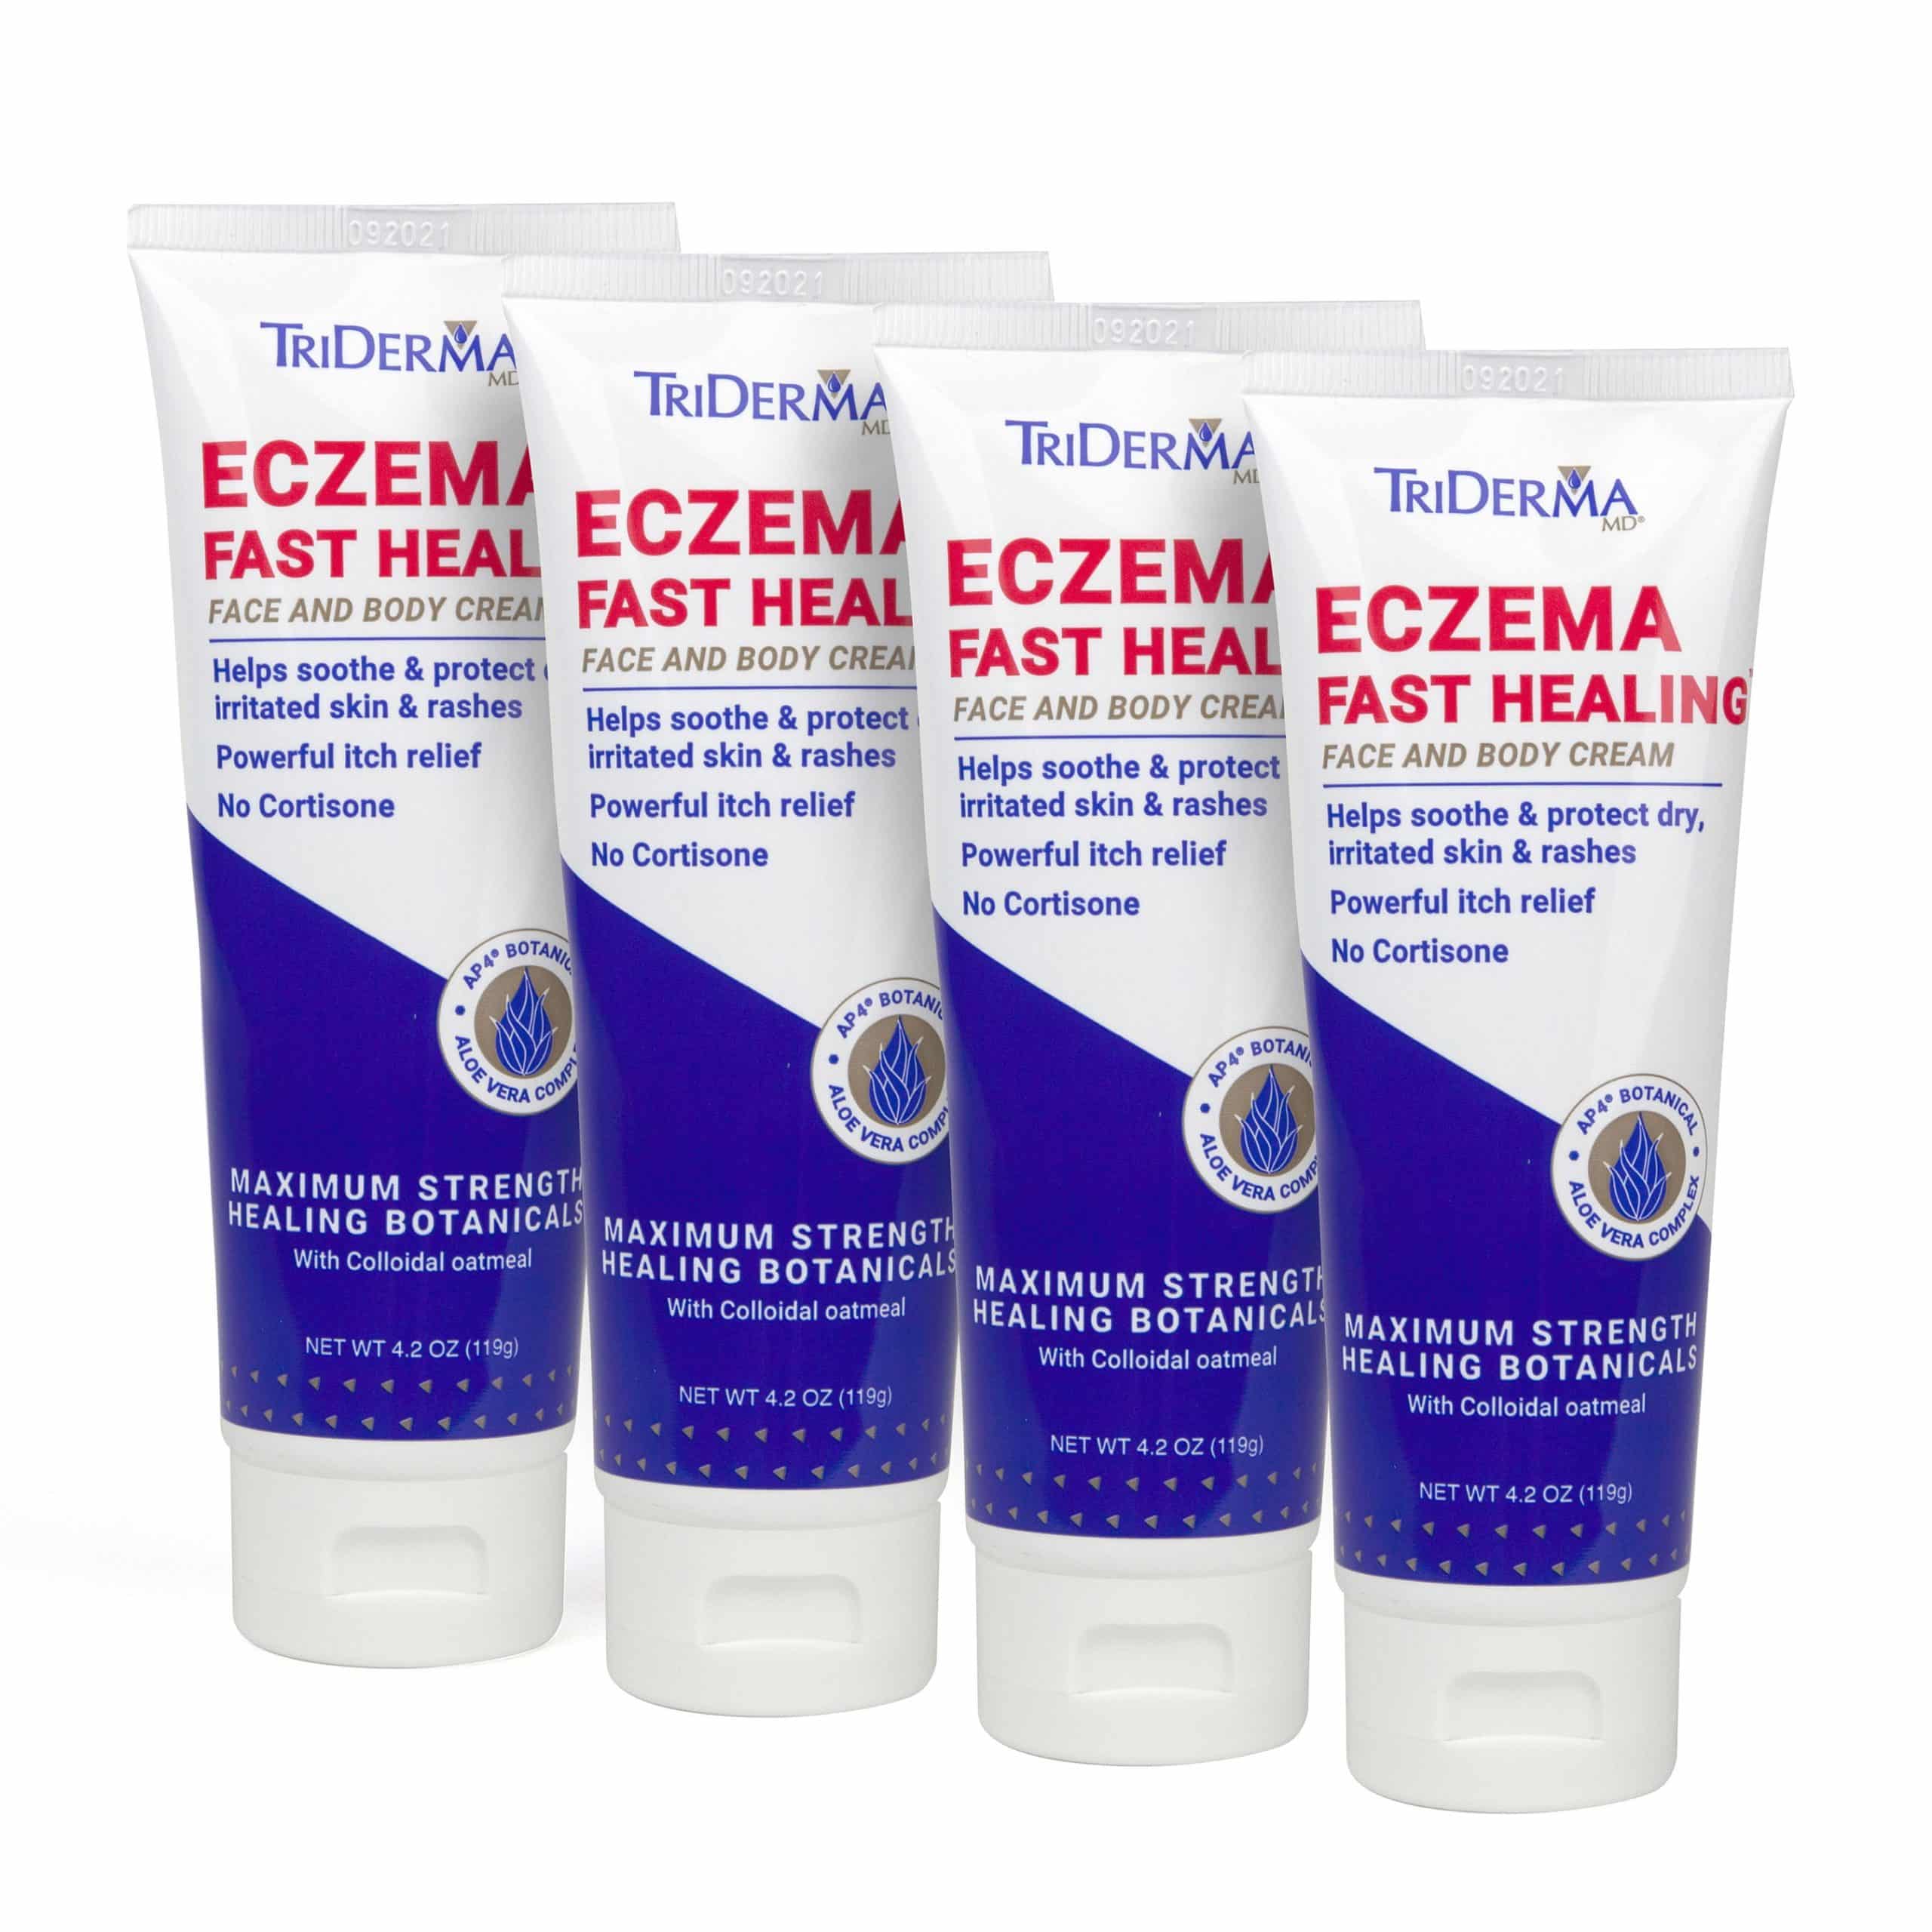 TriDerma Eczema Fast Healing Cream Value 4